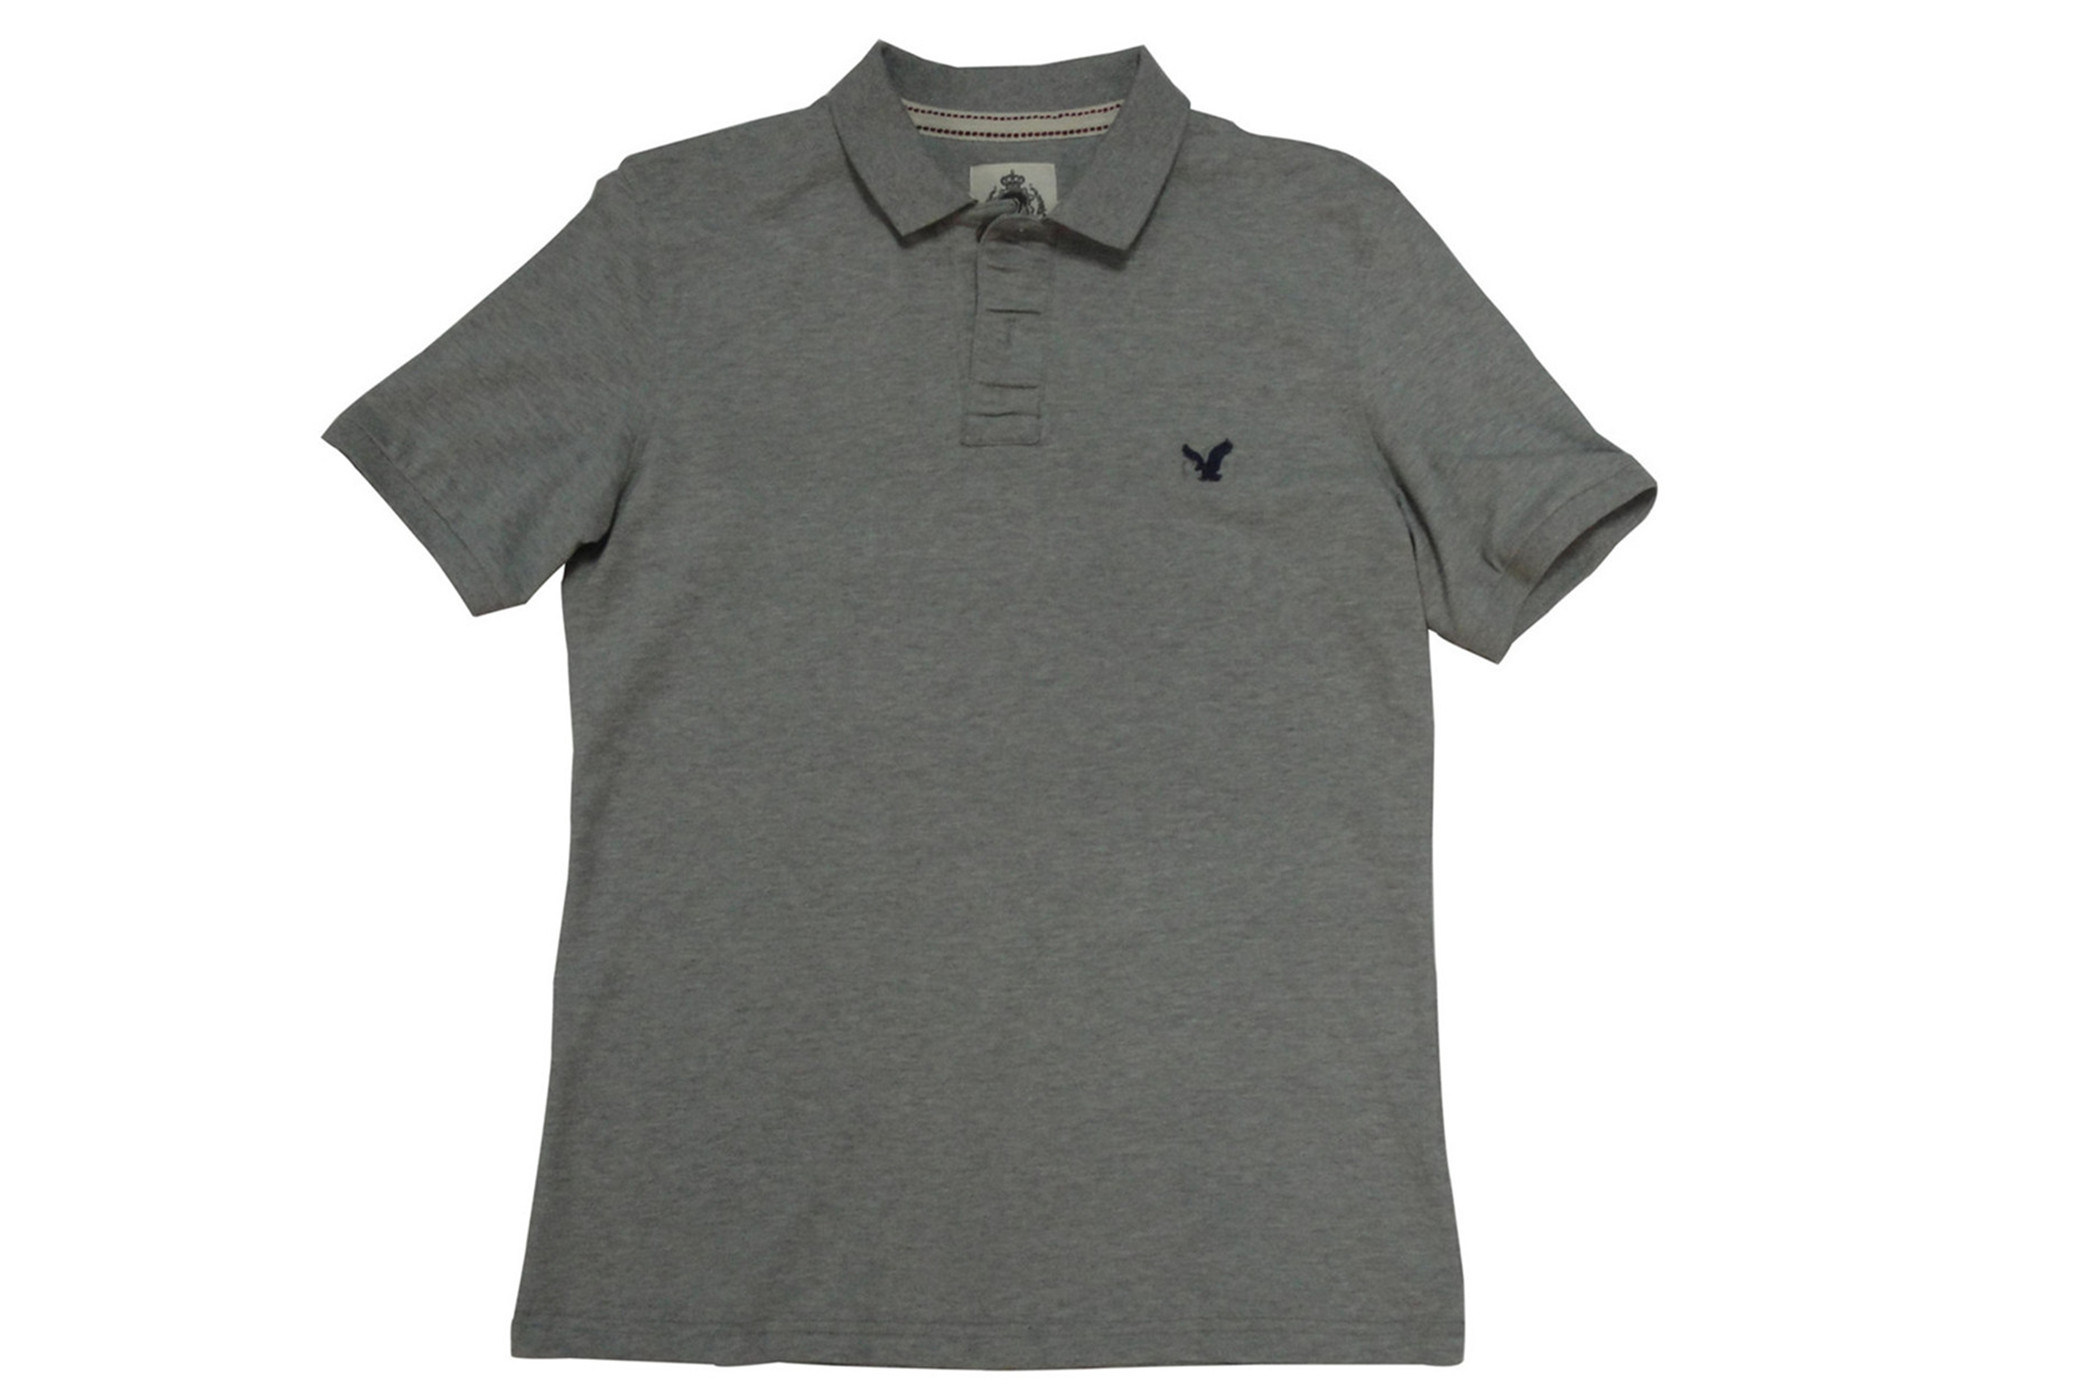 Plain Men's Polo T-Shirt for Fashion Clothing (DSC00315)